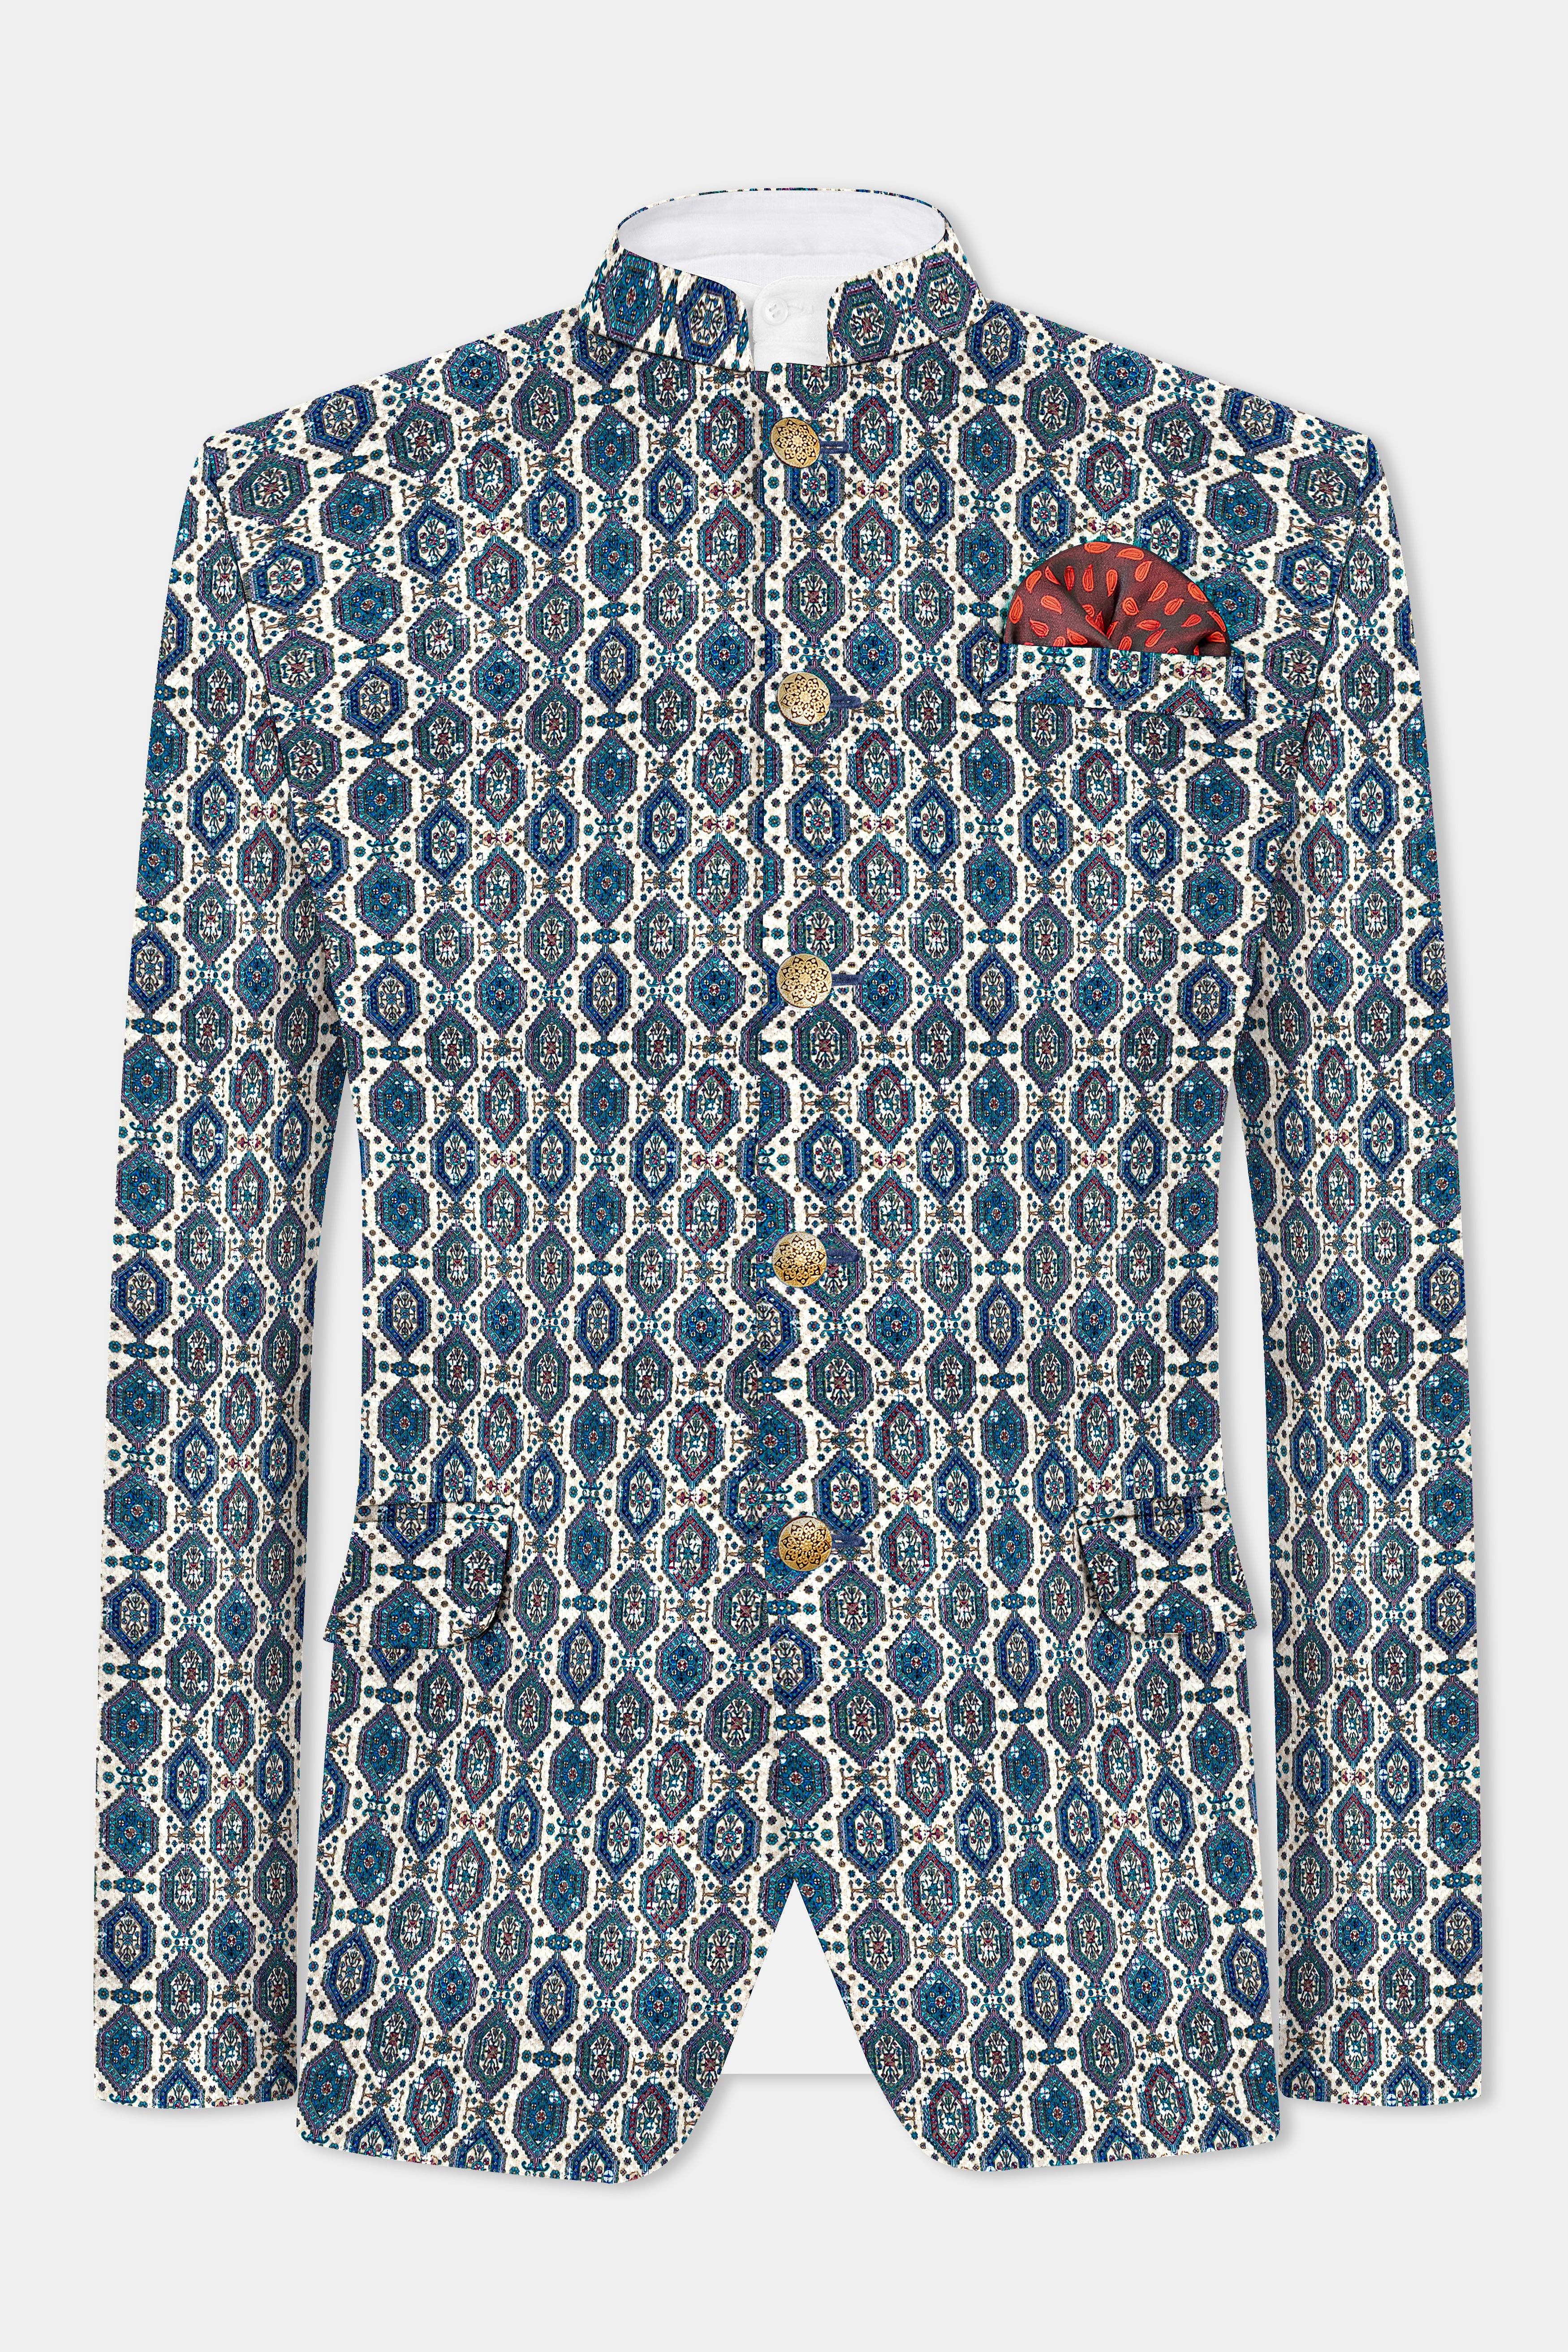 Bluish blue And Claret Red Thread Embroidered Bandhgala Jodhpuri